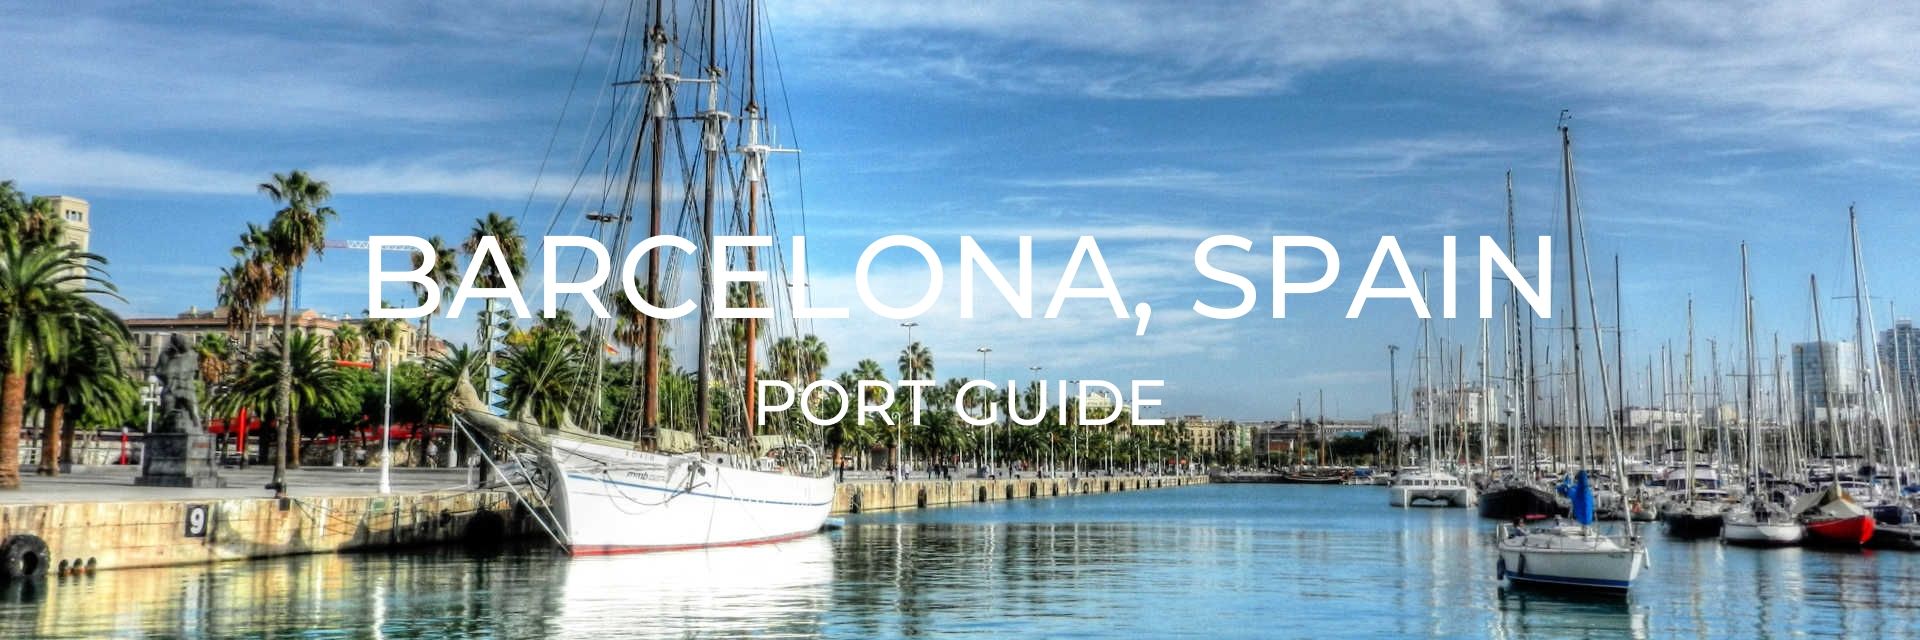 barcelona port cruise schedule